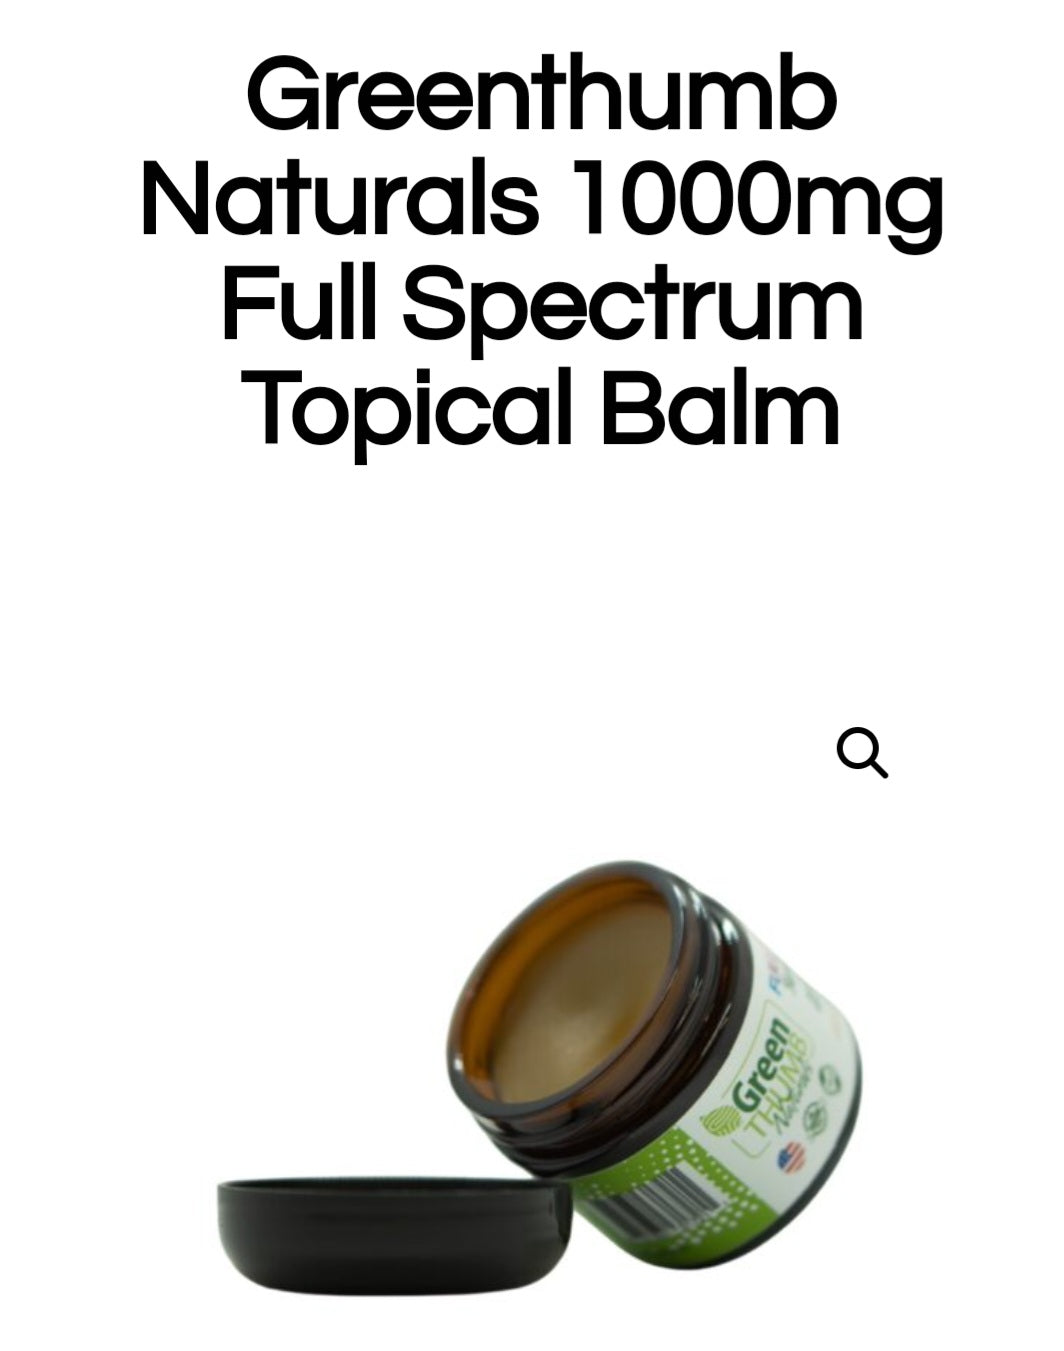 Greenthumb Naturals 1000mg Full Spectrum Topical Balm